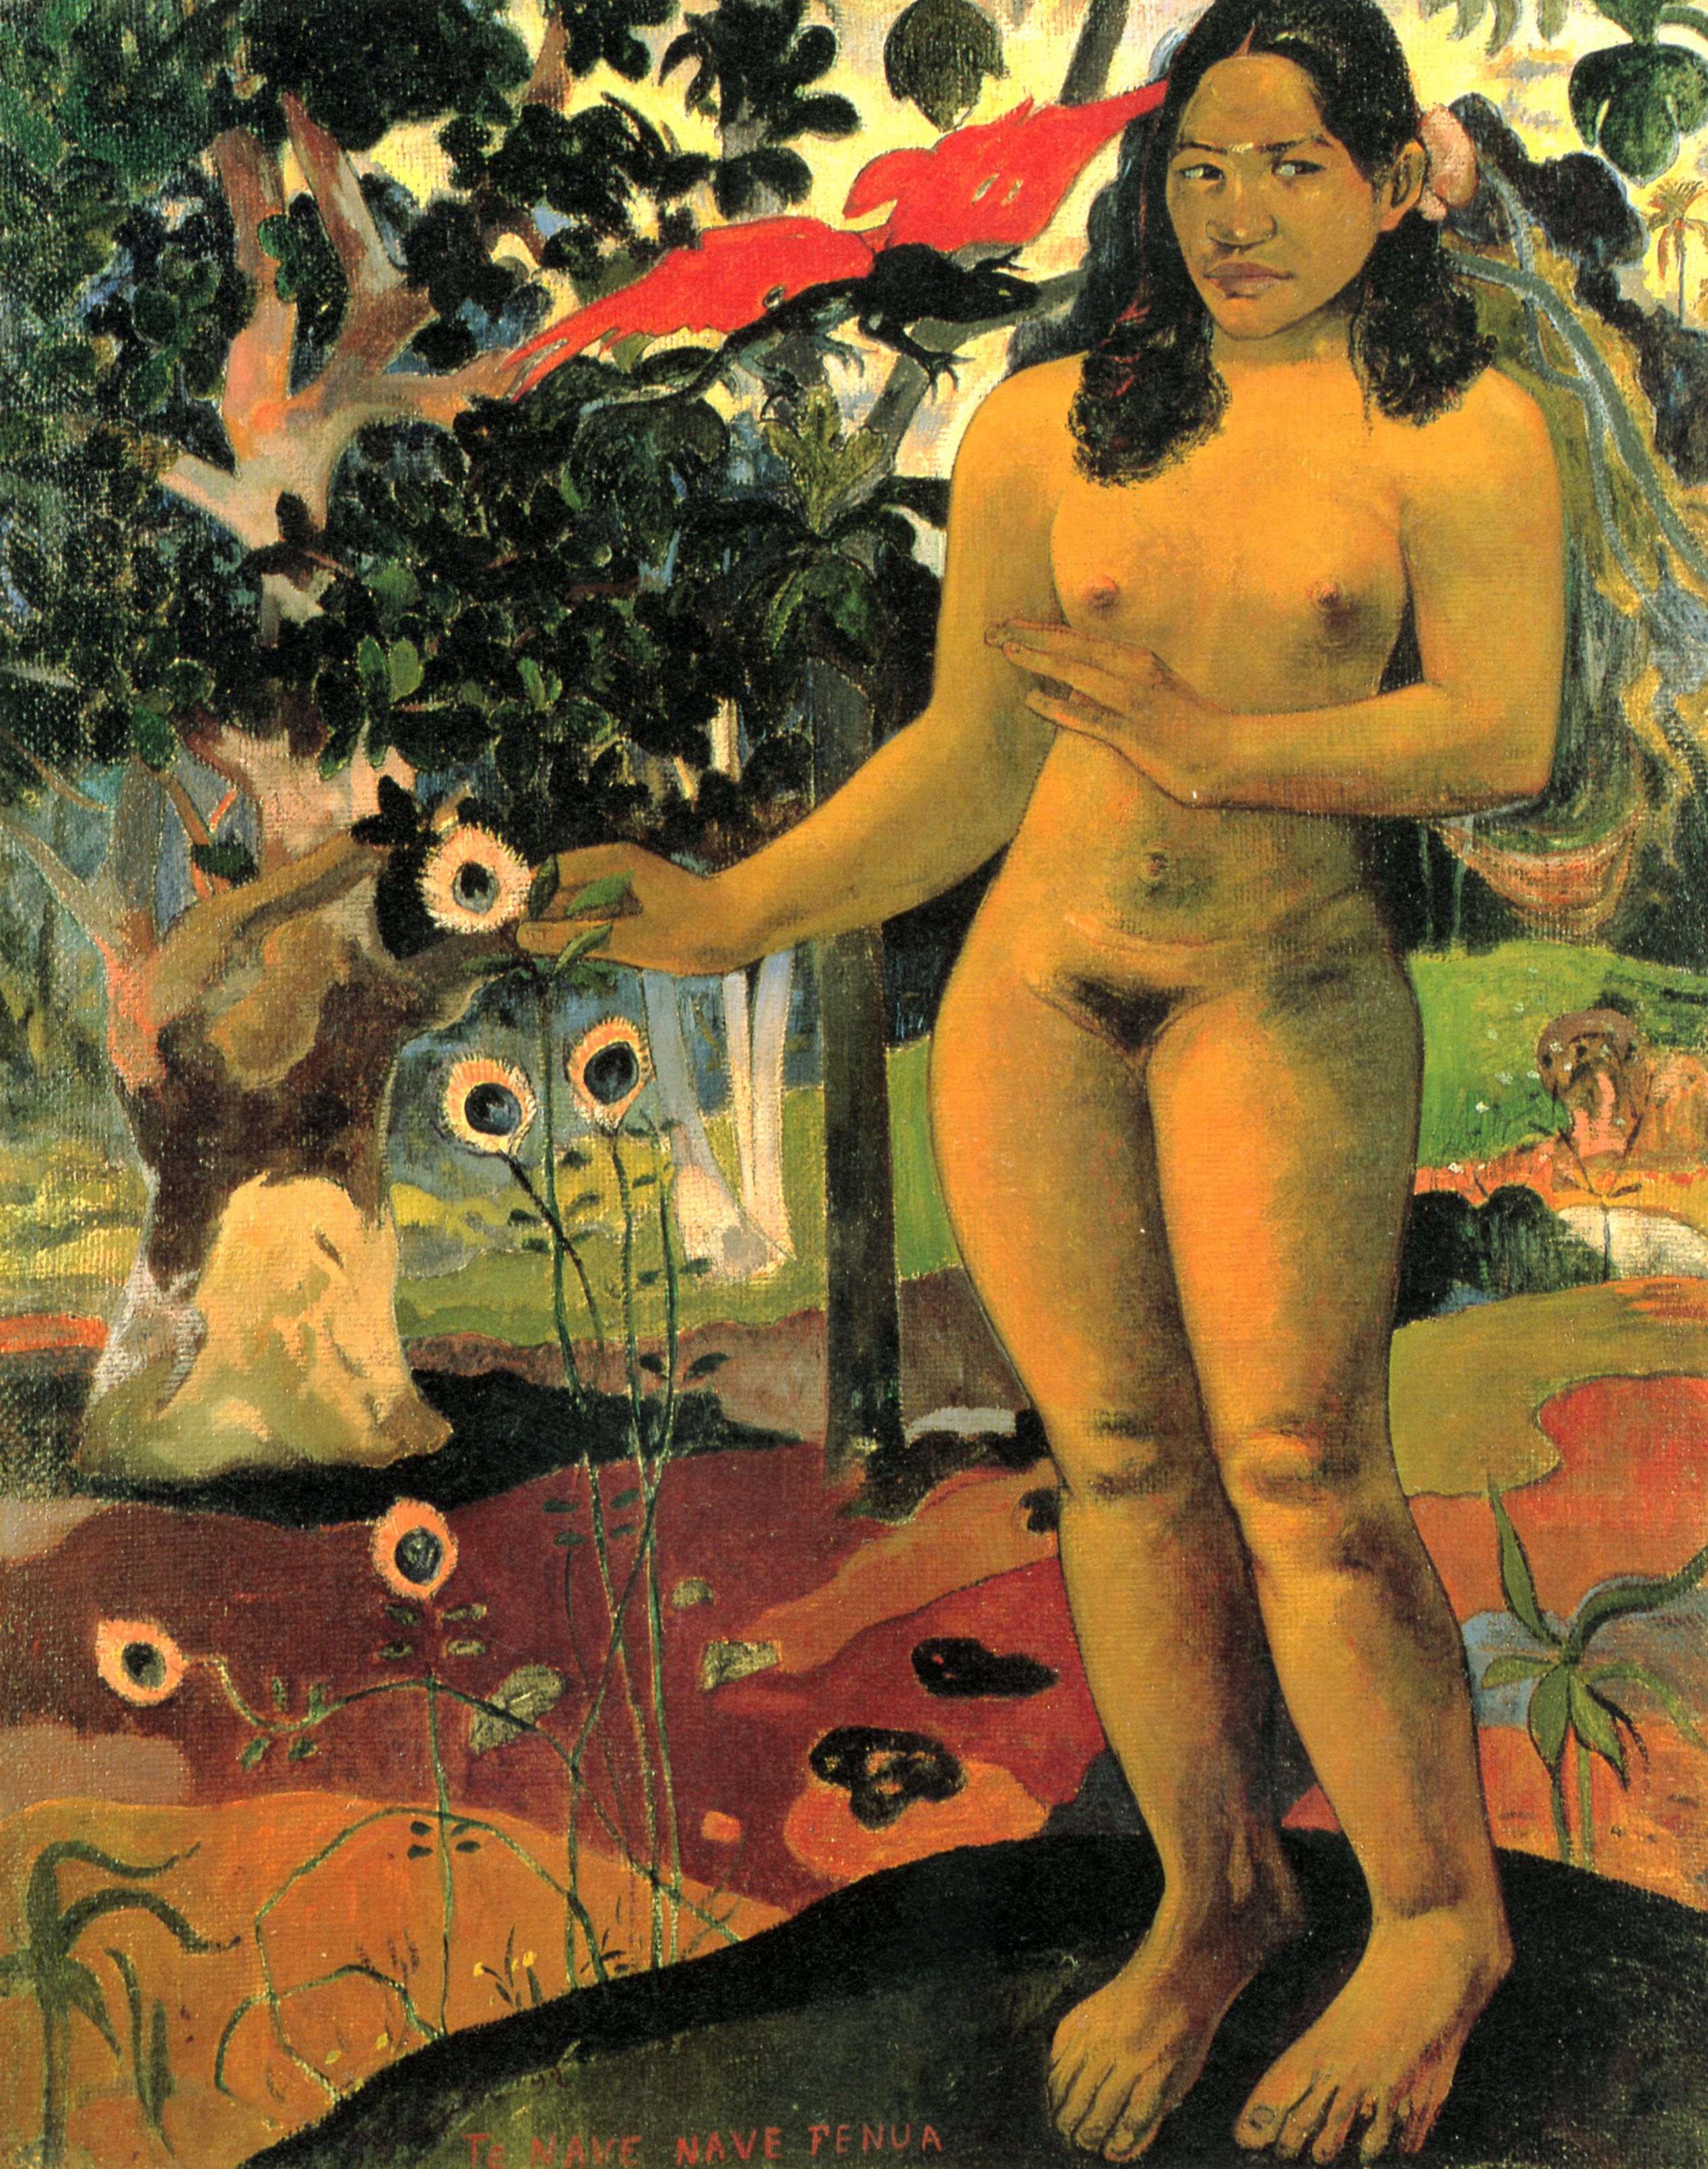 Paul Gauguin: Herrliches Land (Te nave nave fenua)